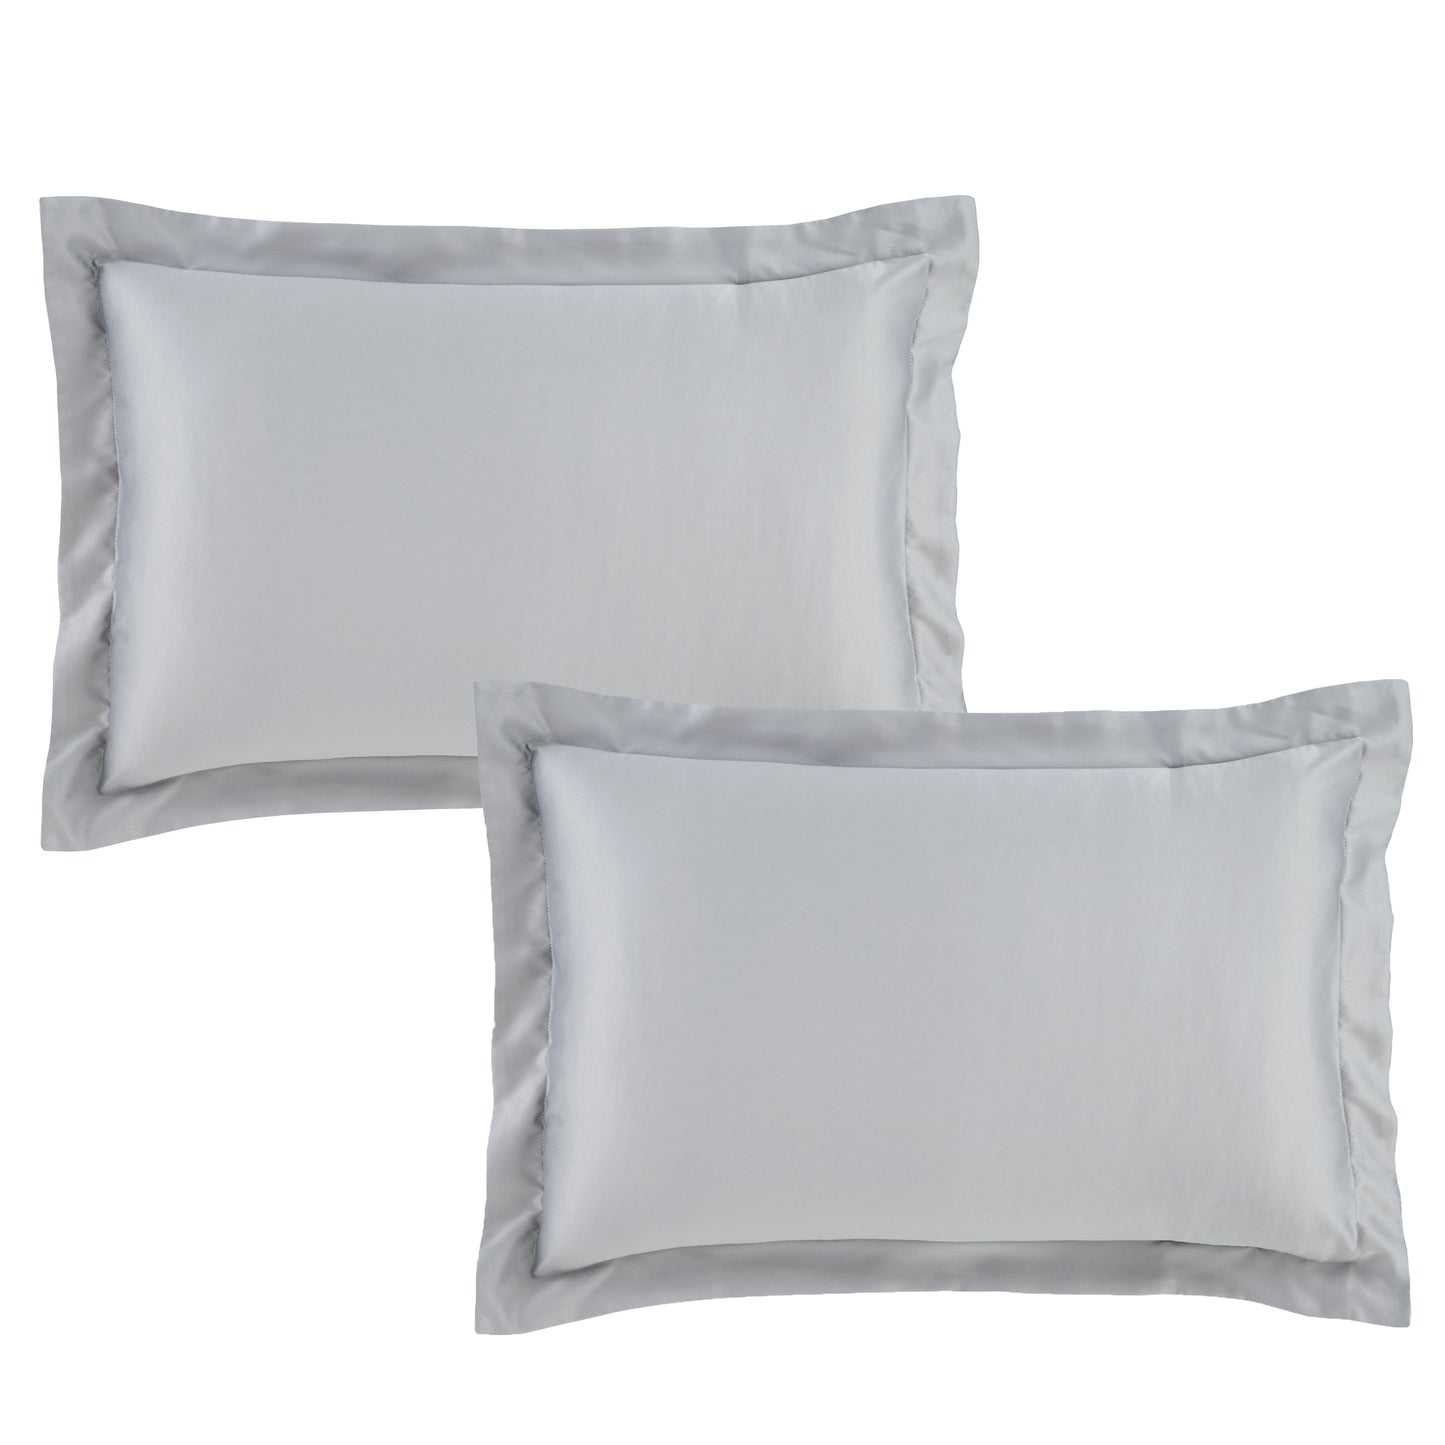 Catherine Lansfield Silver Silky Soft Satin Oxford Pillowcase Pair